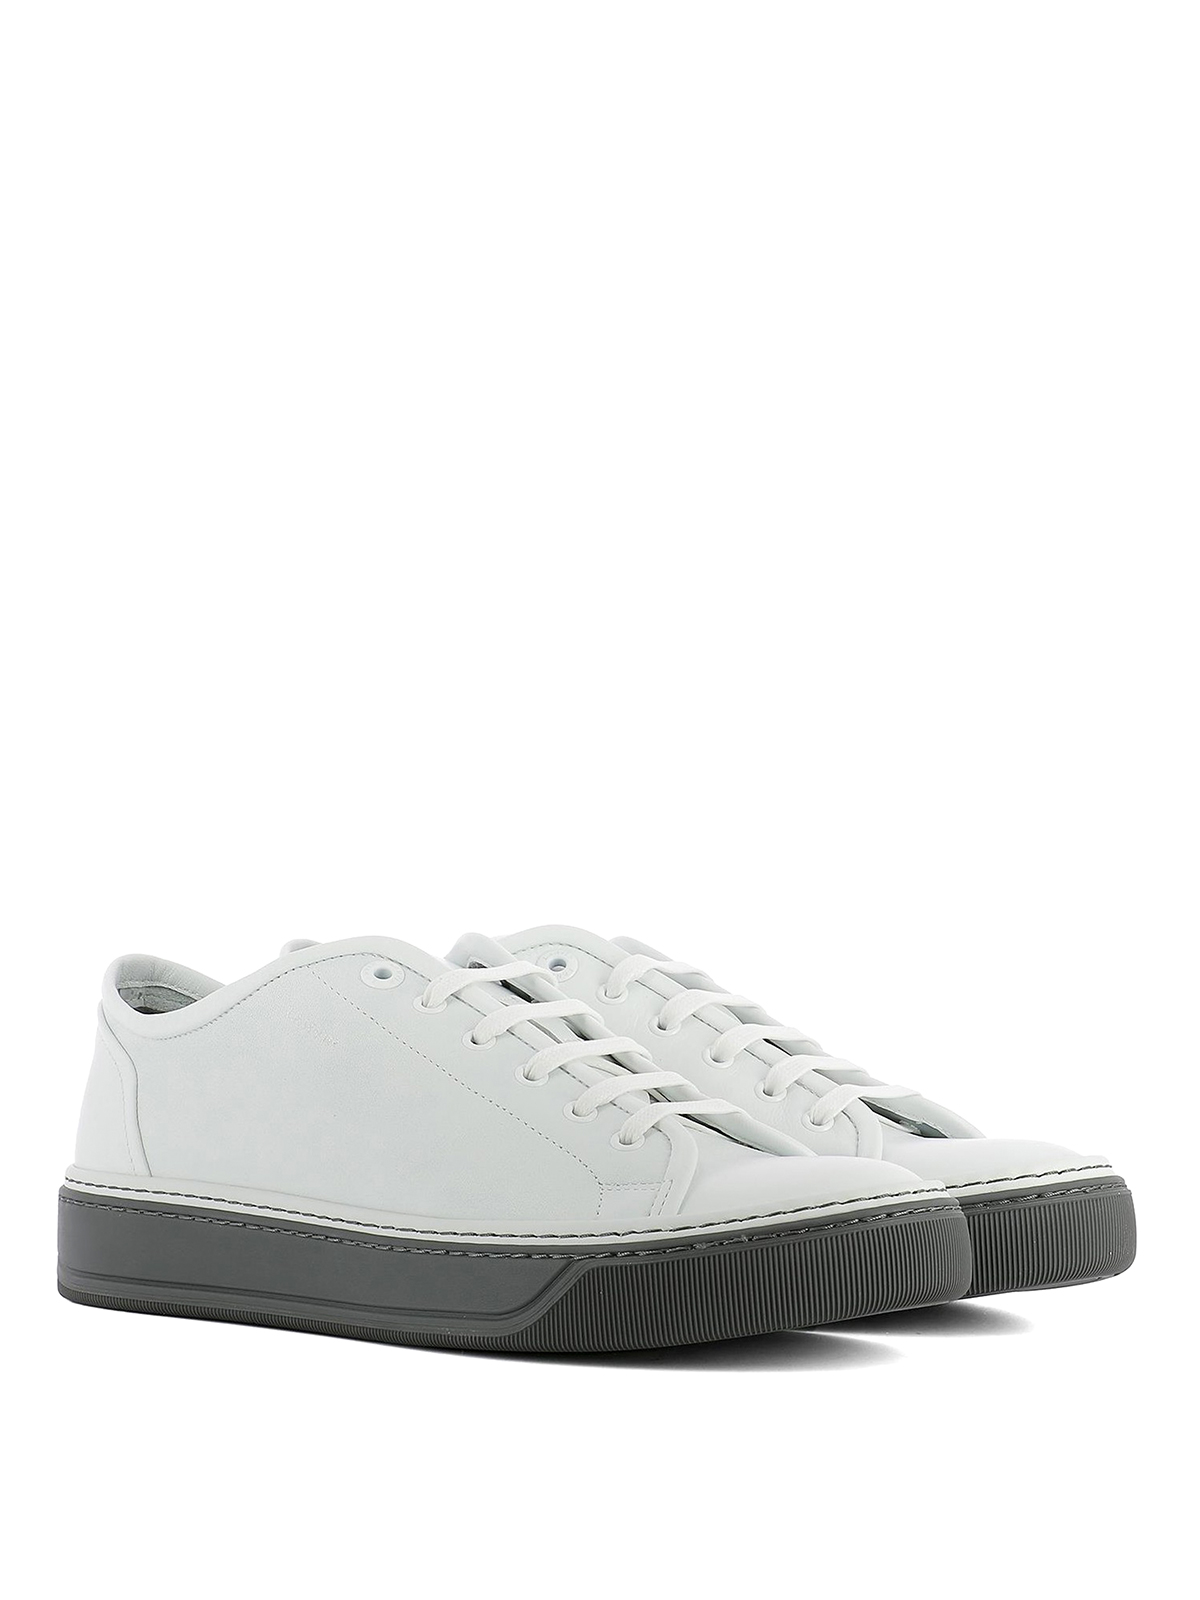 lanvin white sneakers